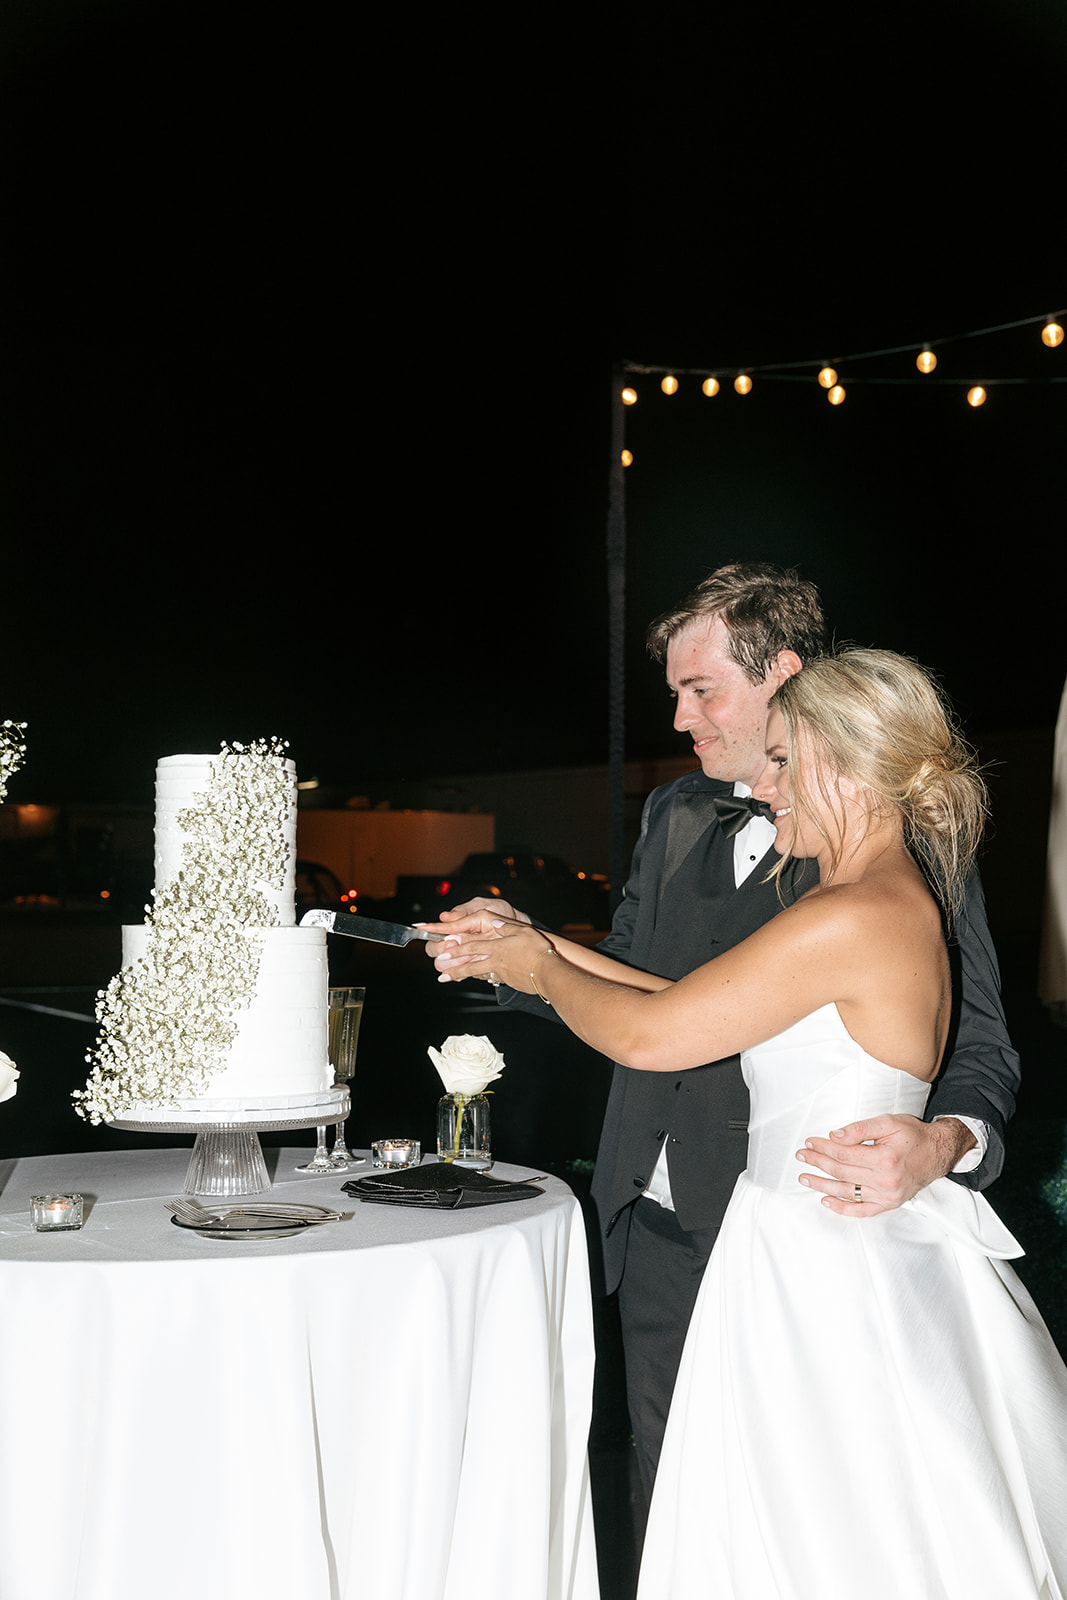 hangar 21 wedding fullerton california cake cutting wedding cake fun cake cutting pictures cake cutting photos